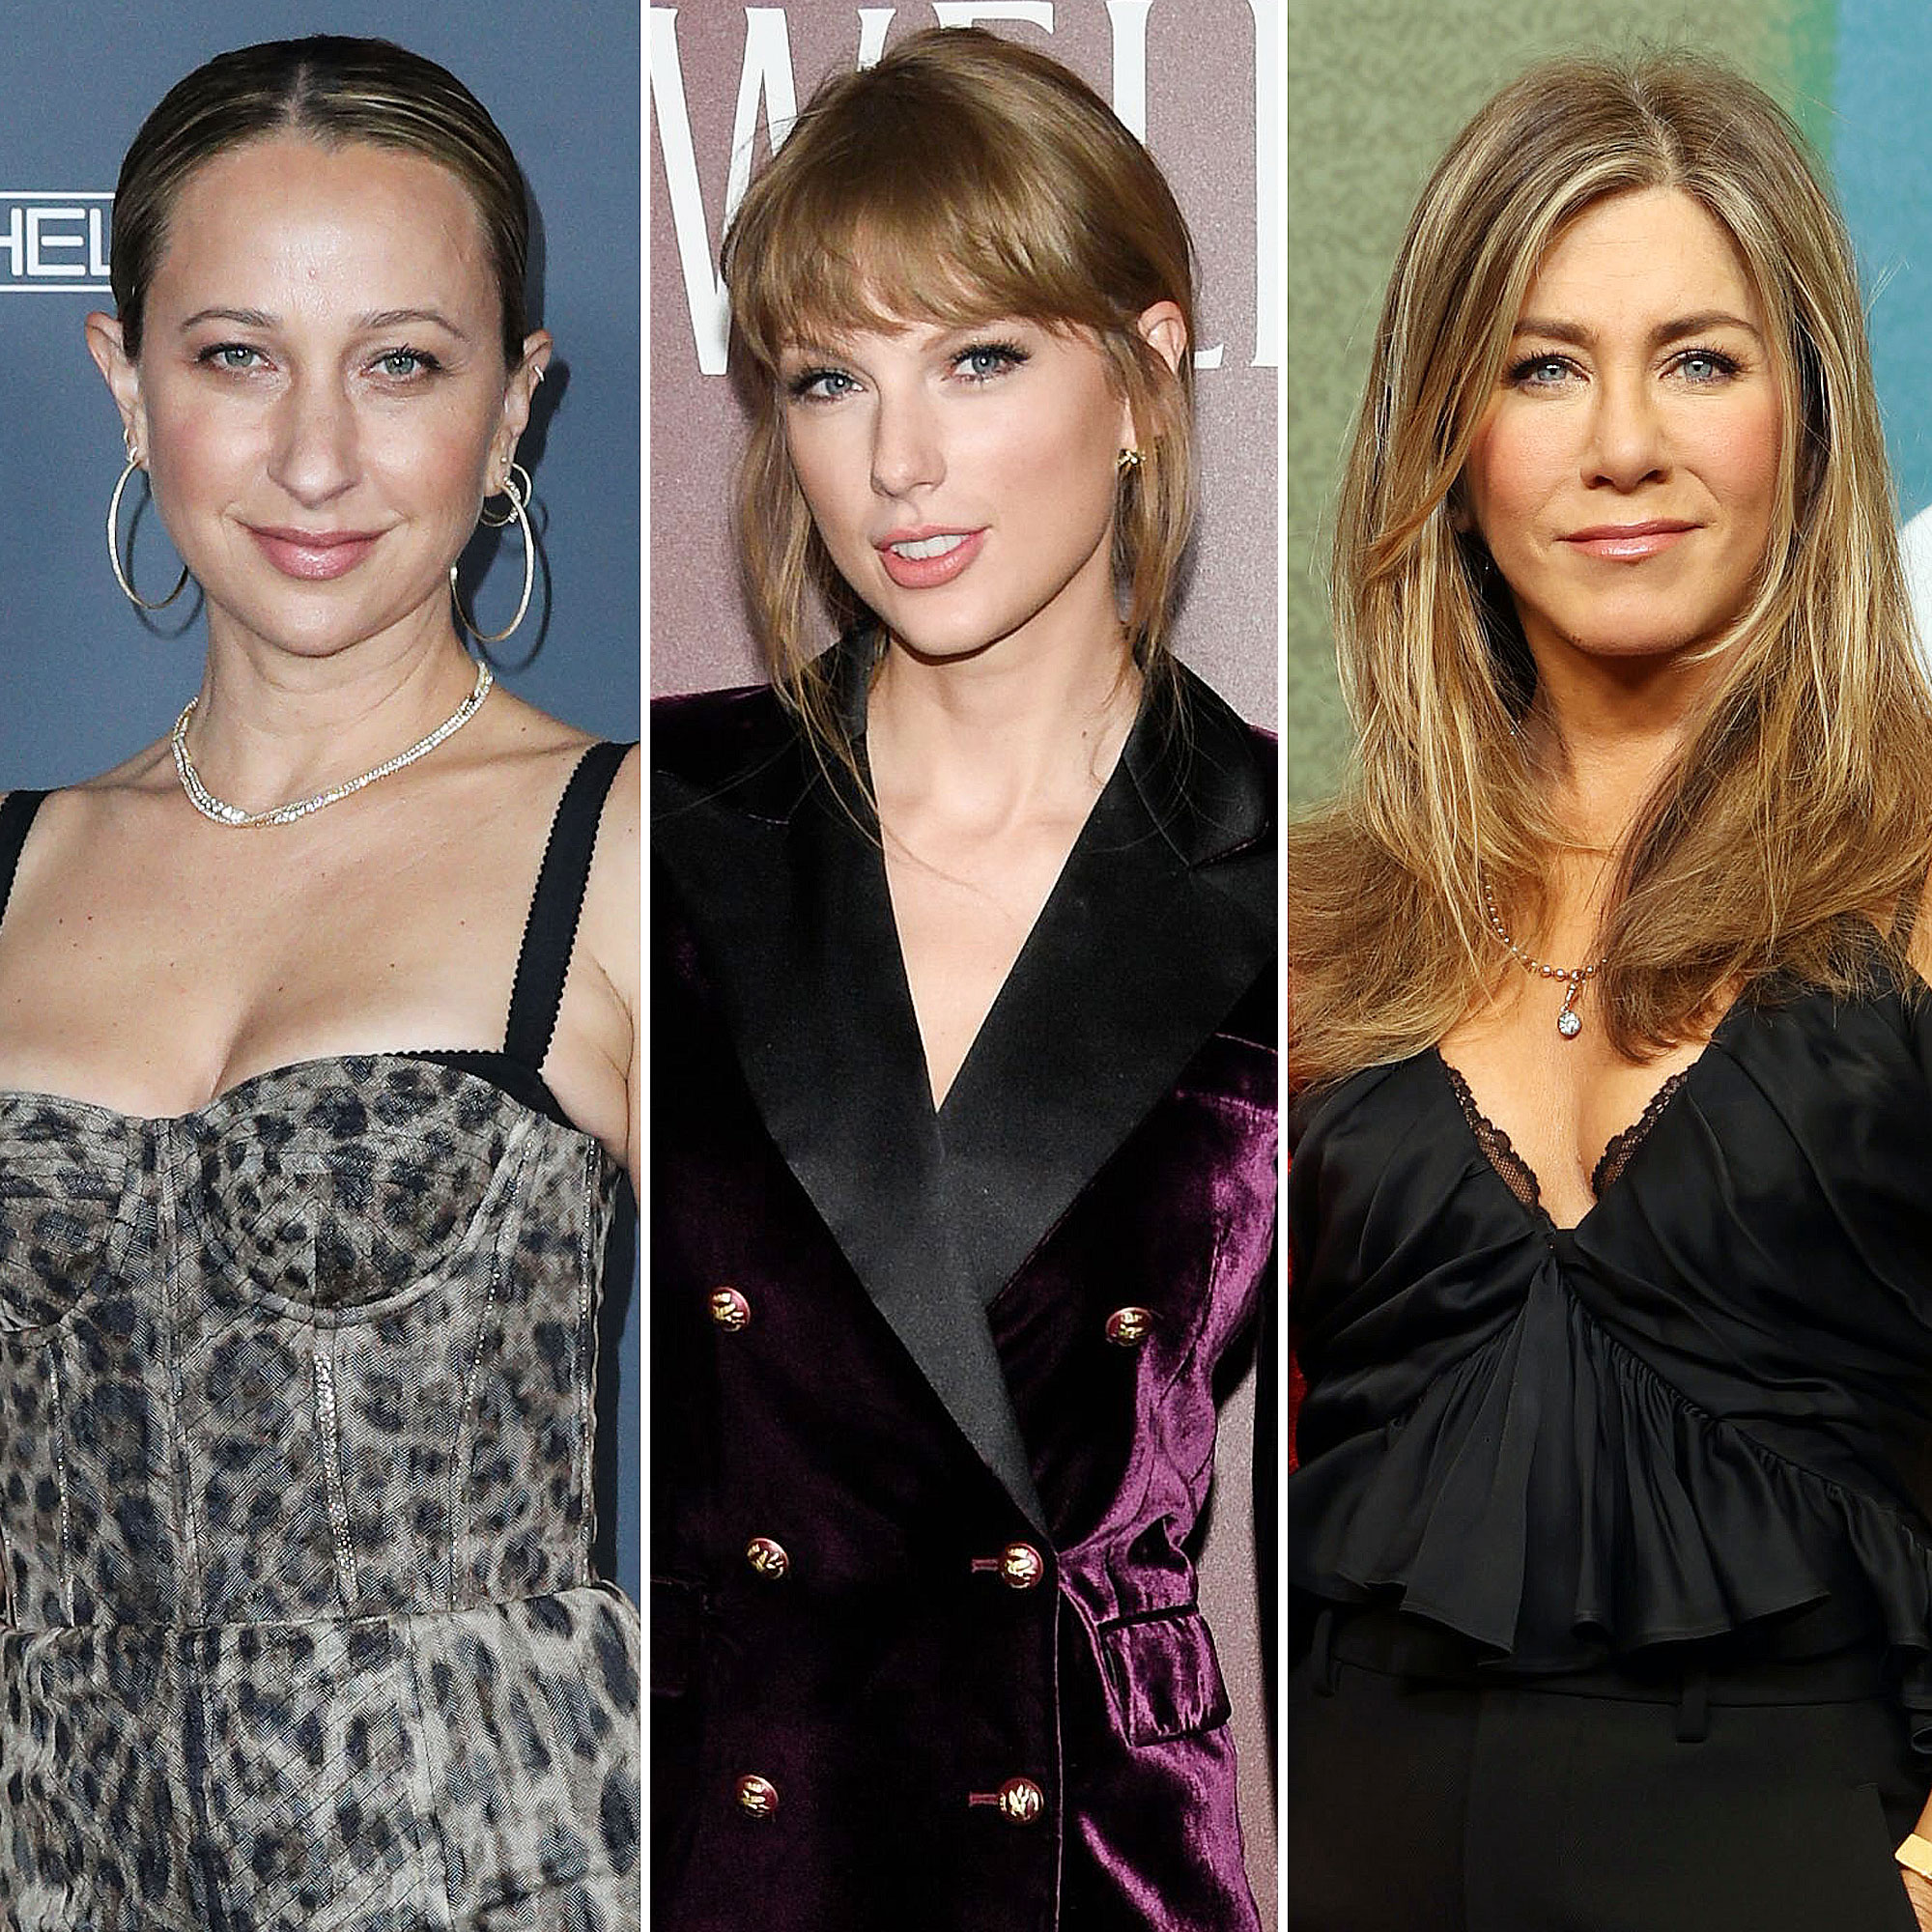 Jennifer Aniston Down Blouse Upskirt - Jennifer Aniston Not Taylor Swift's 'All Too Well' Actress, Pal Says